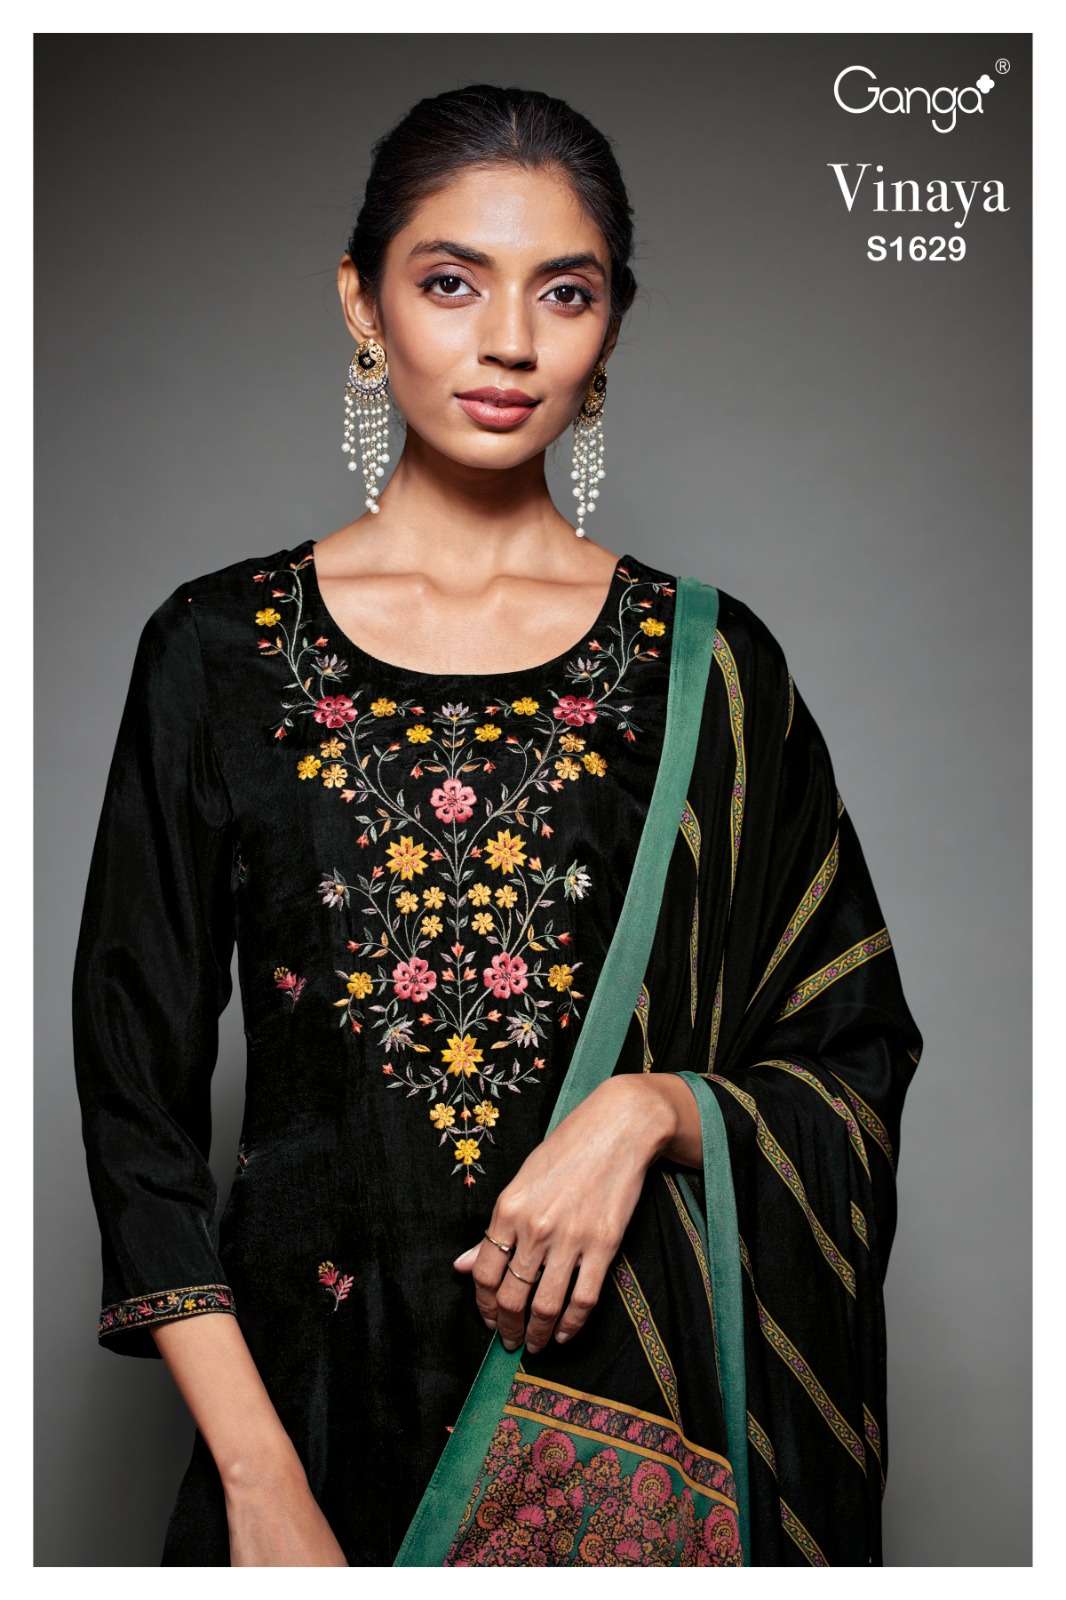 ganga vinaya 1629 pure bemberg habutai silk designer party wear black concept suits online best rate surat 